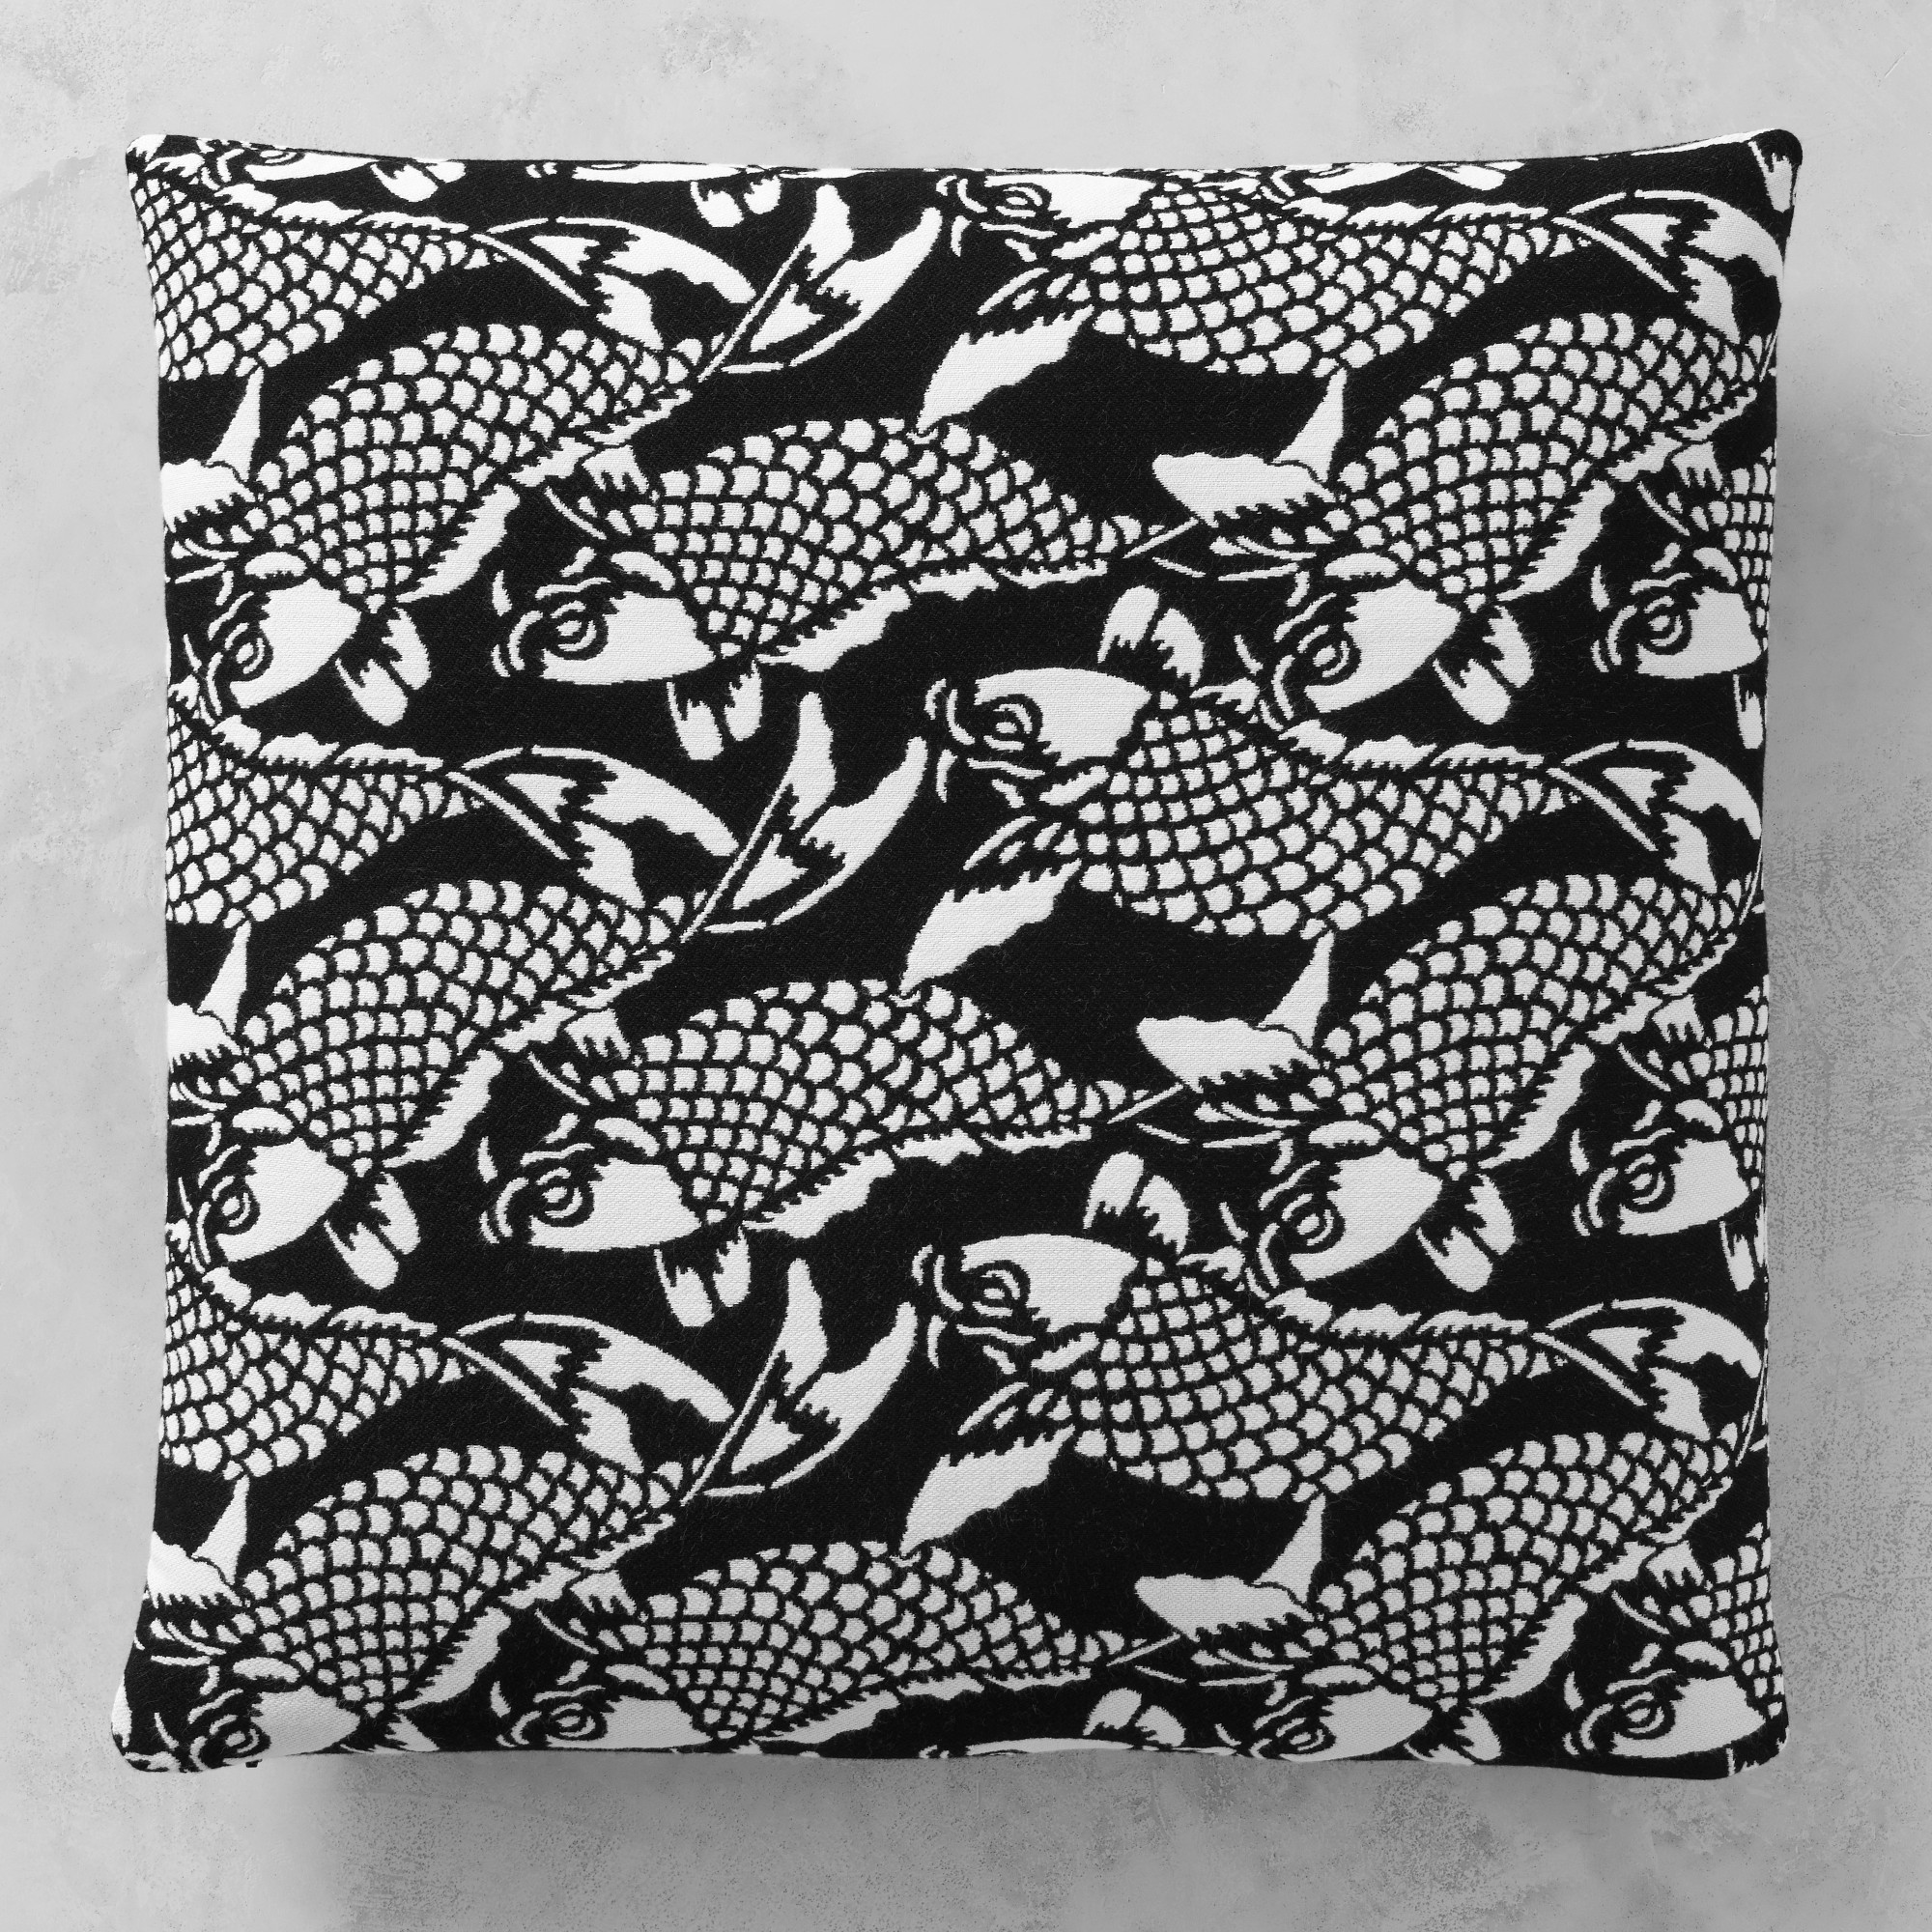 Koi Fish Jacquard Outdoor Pillow Cover